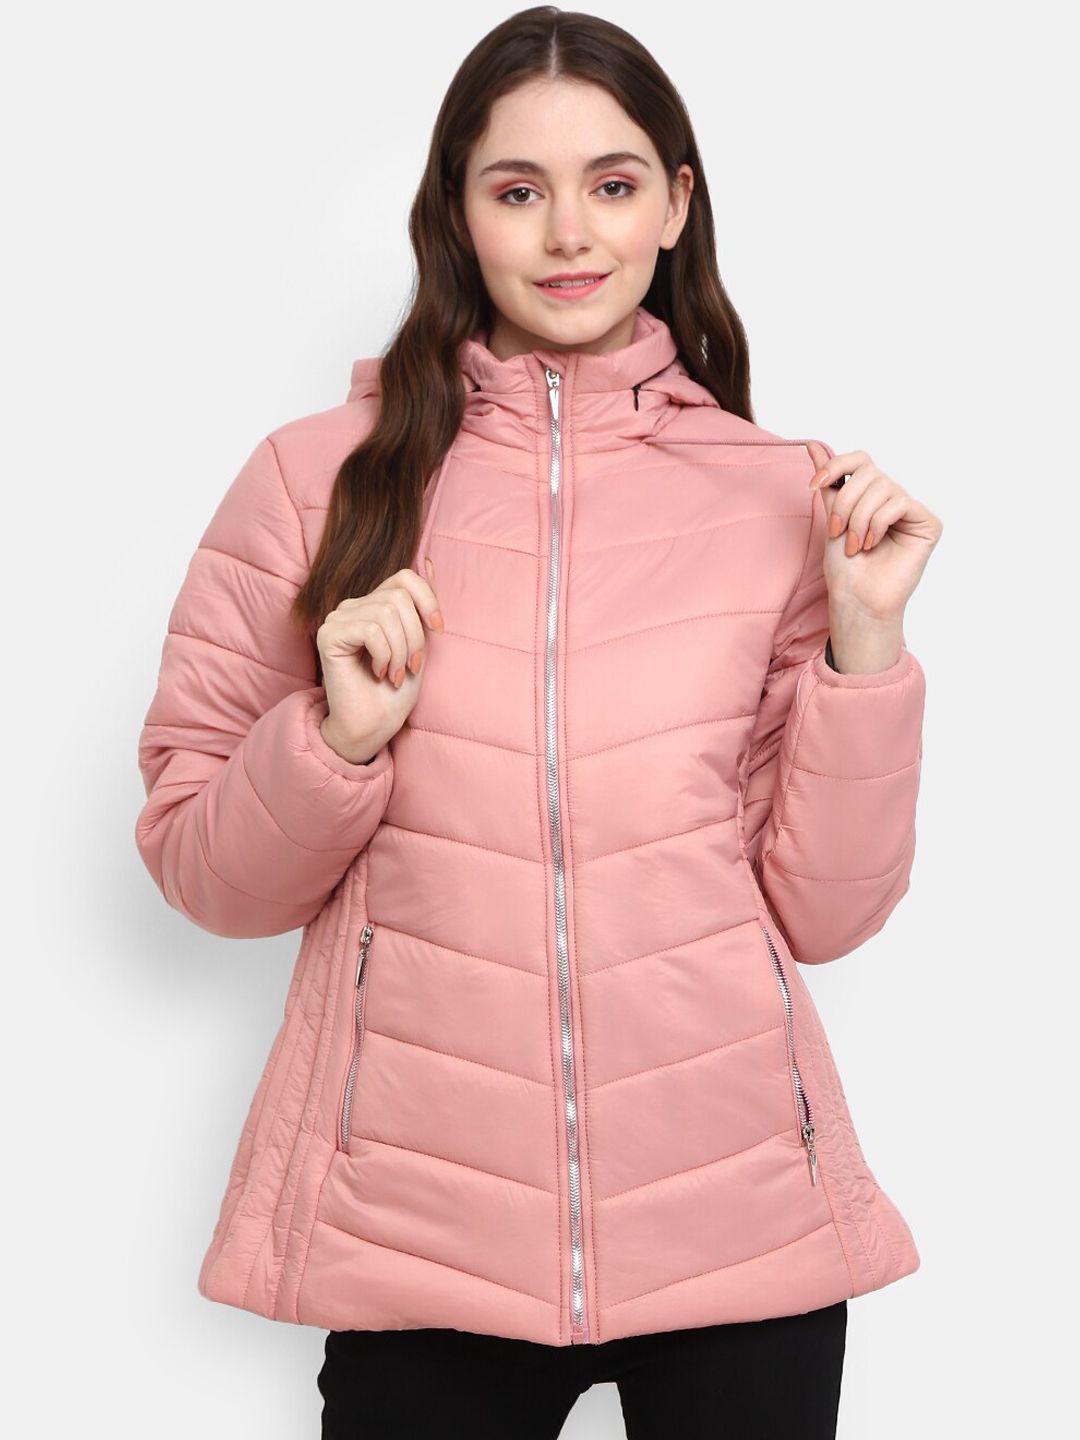 v-mart women plus size pink hooded puffer jacket